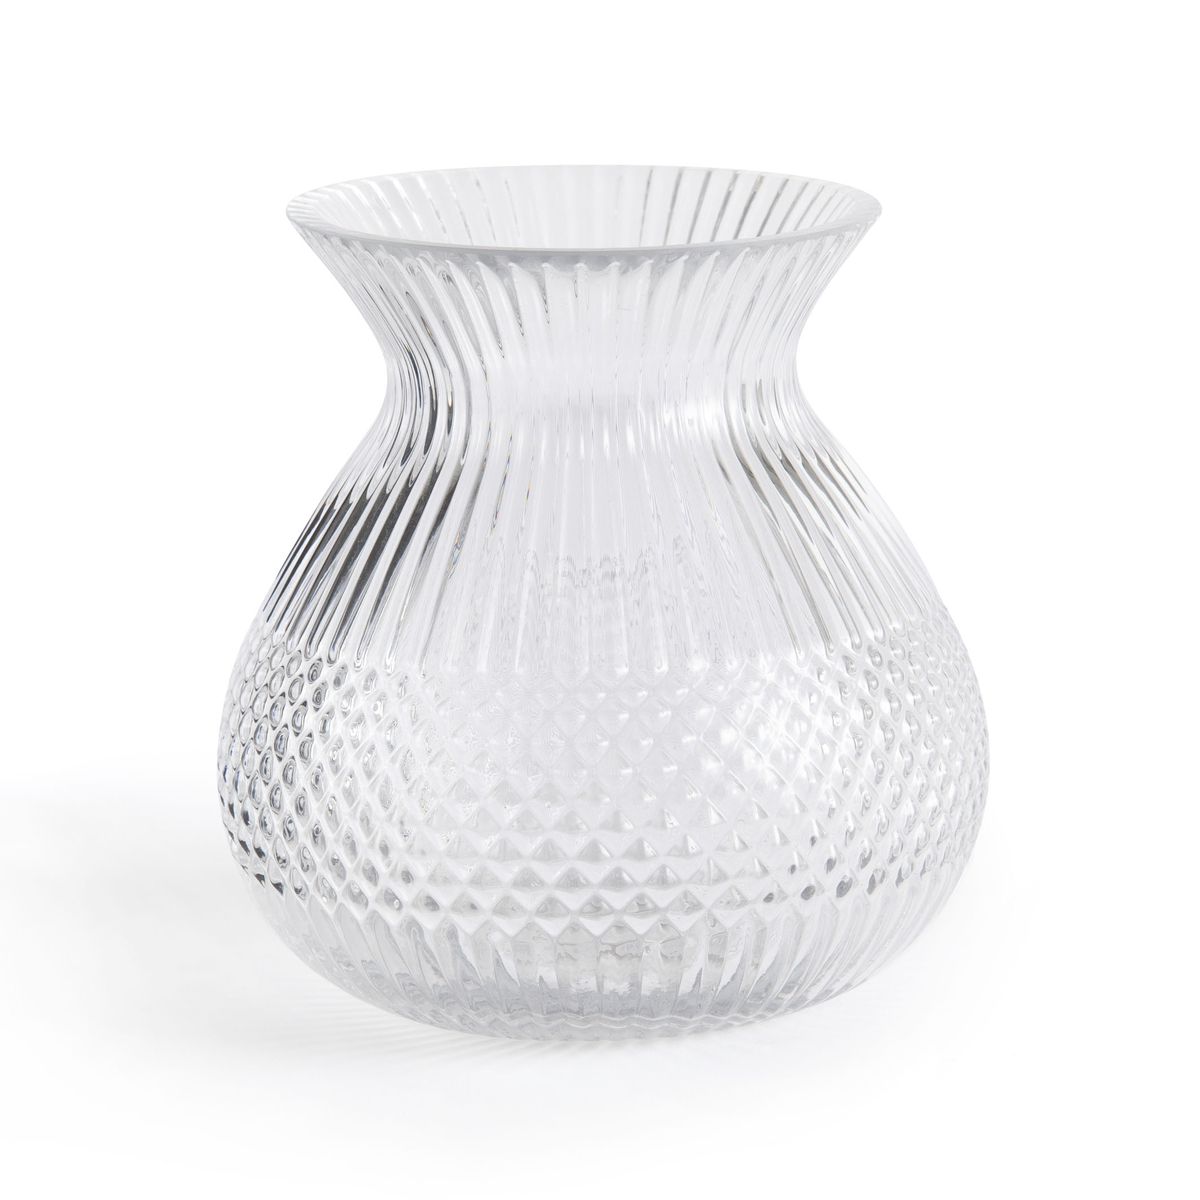 Afa 17cm High Textured Glass Vase